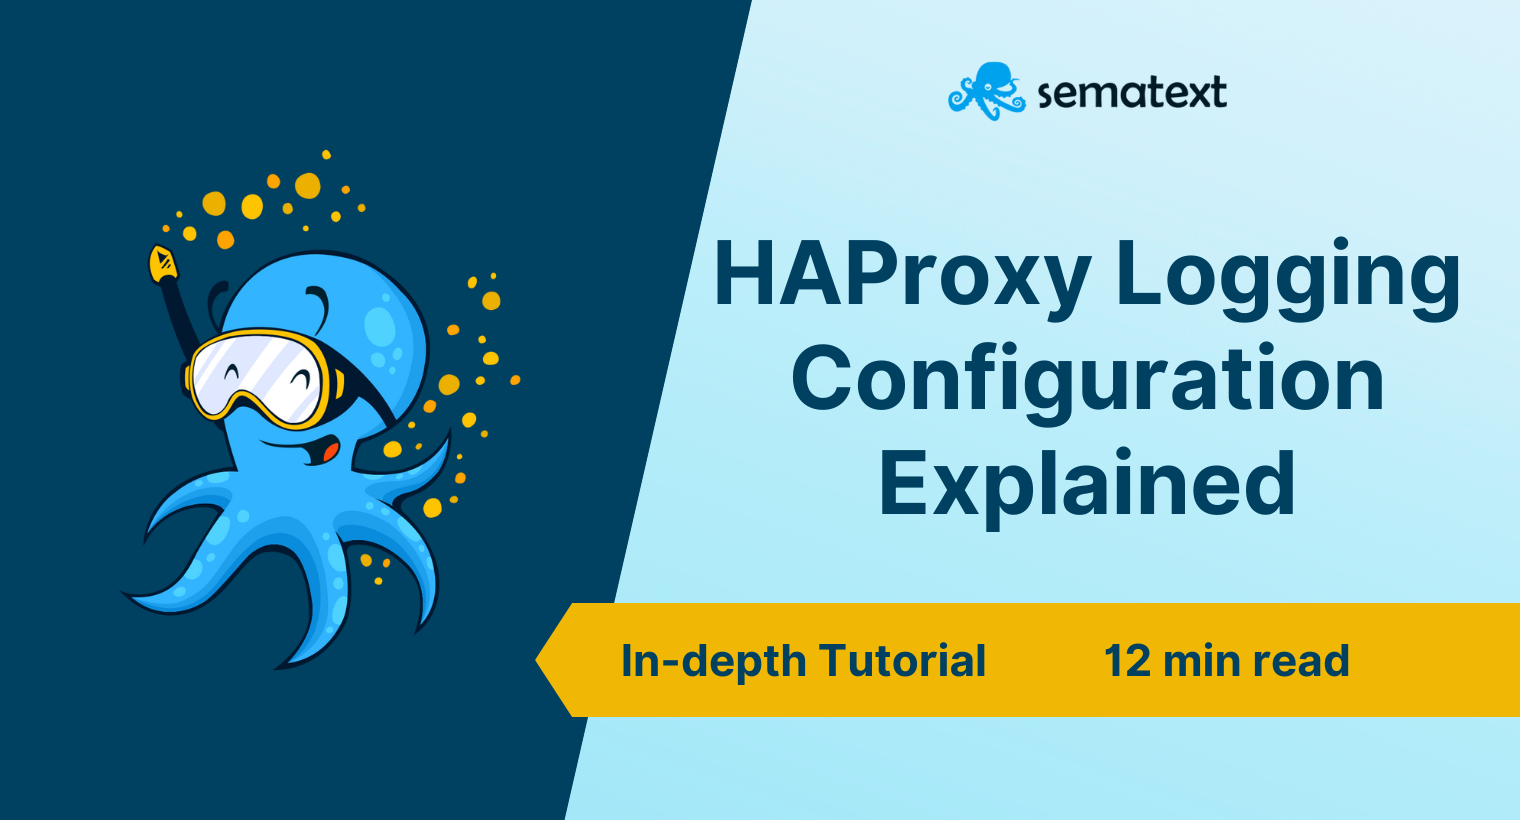 haproxy logs